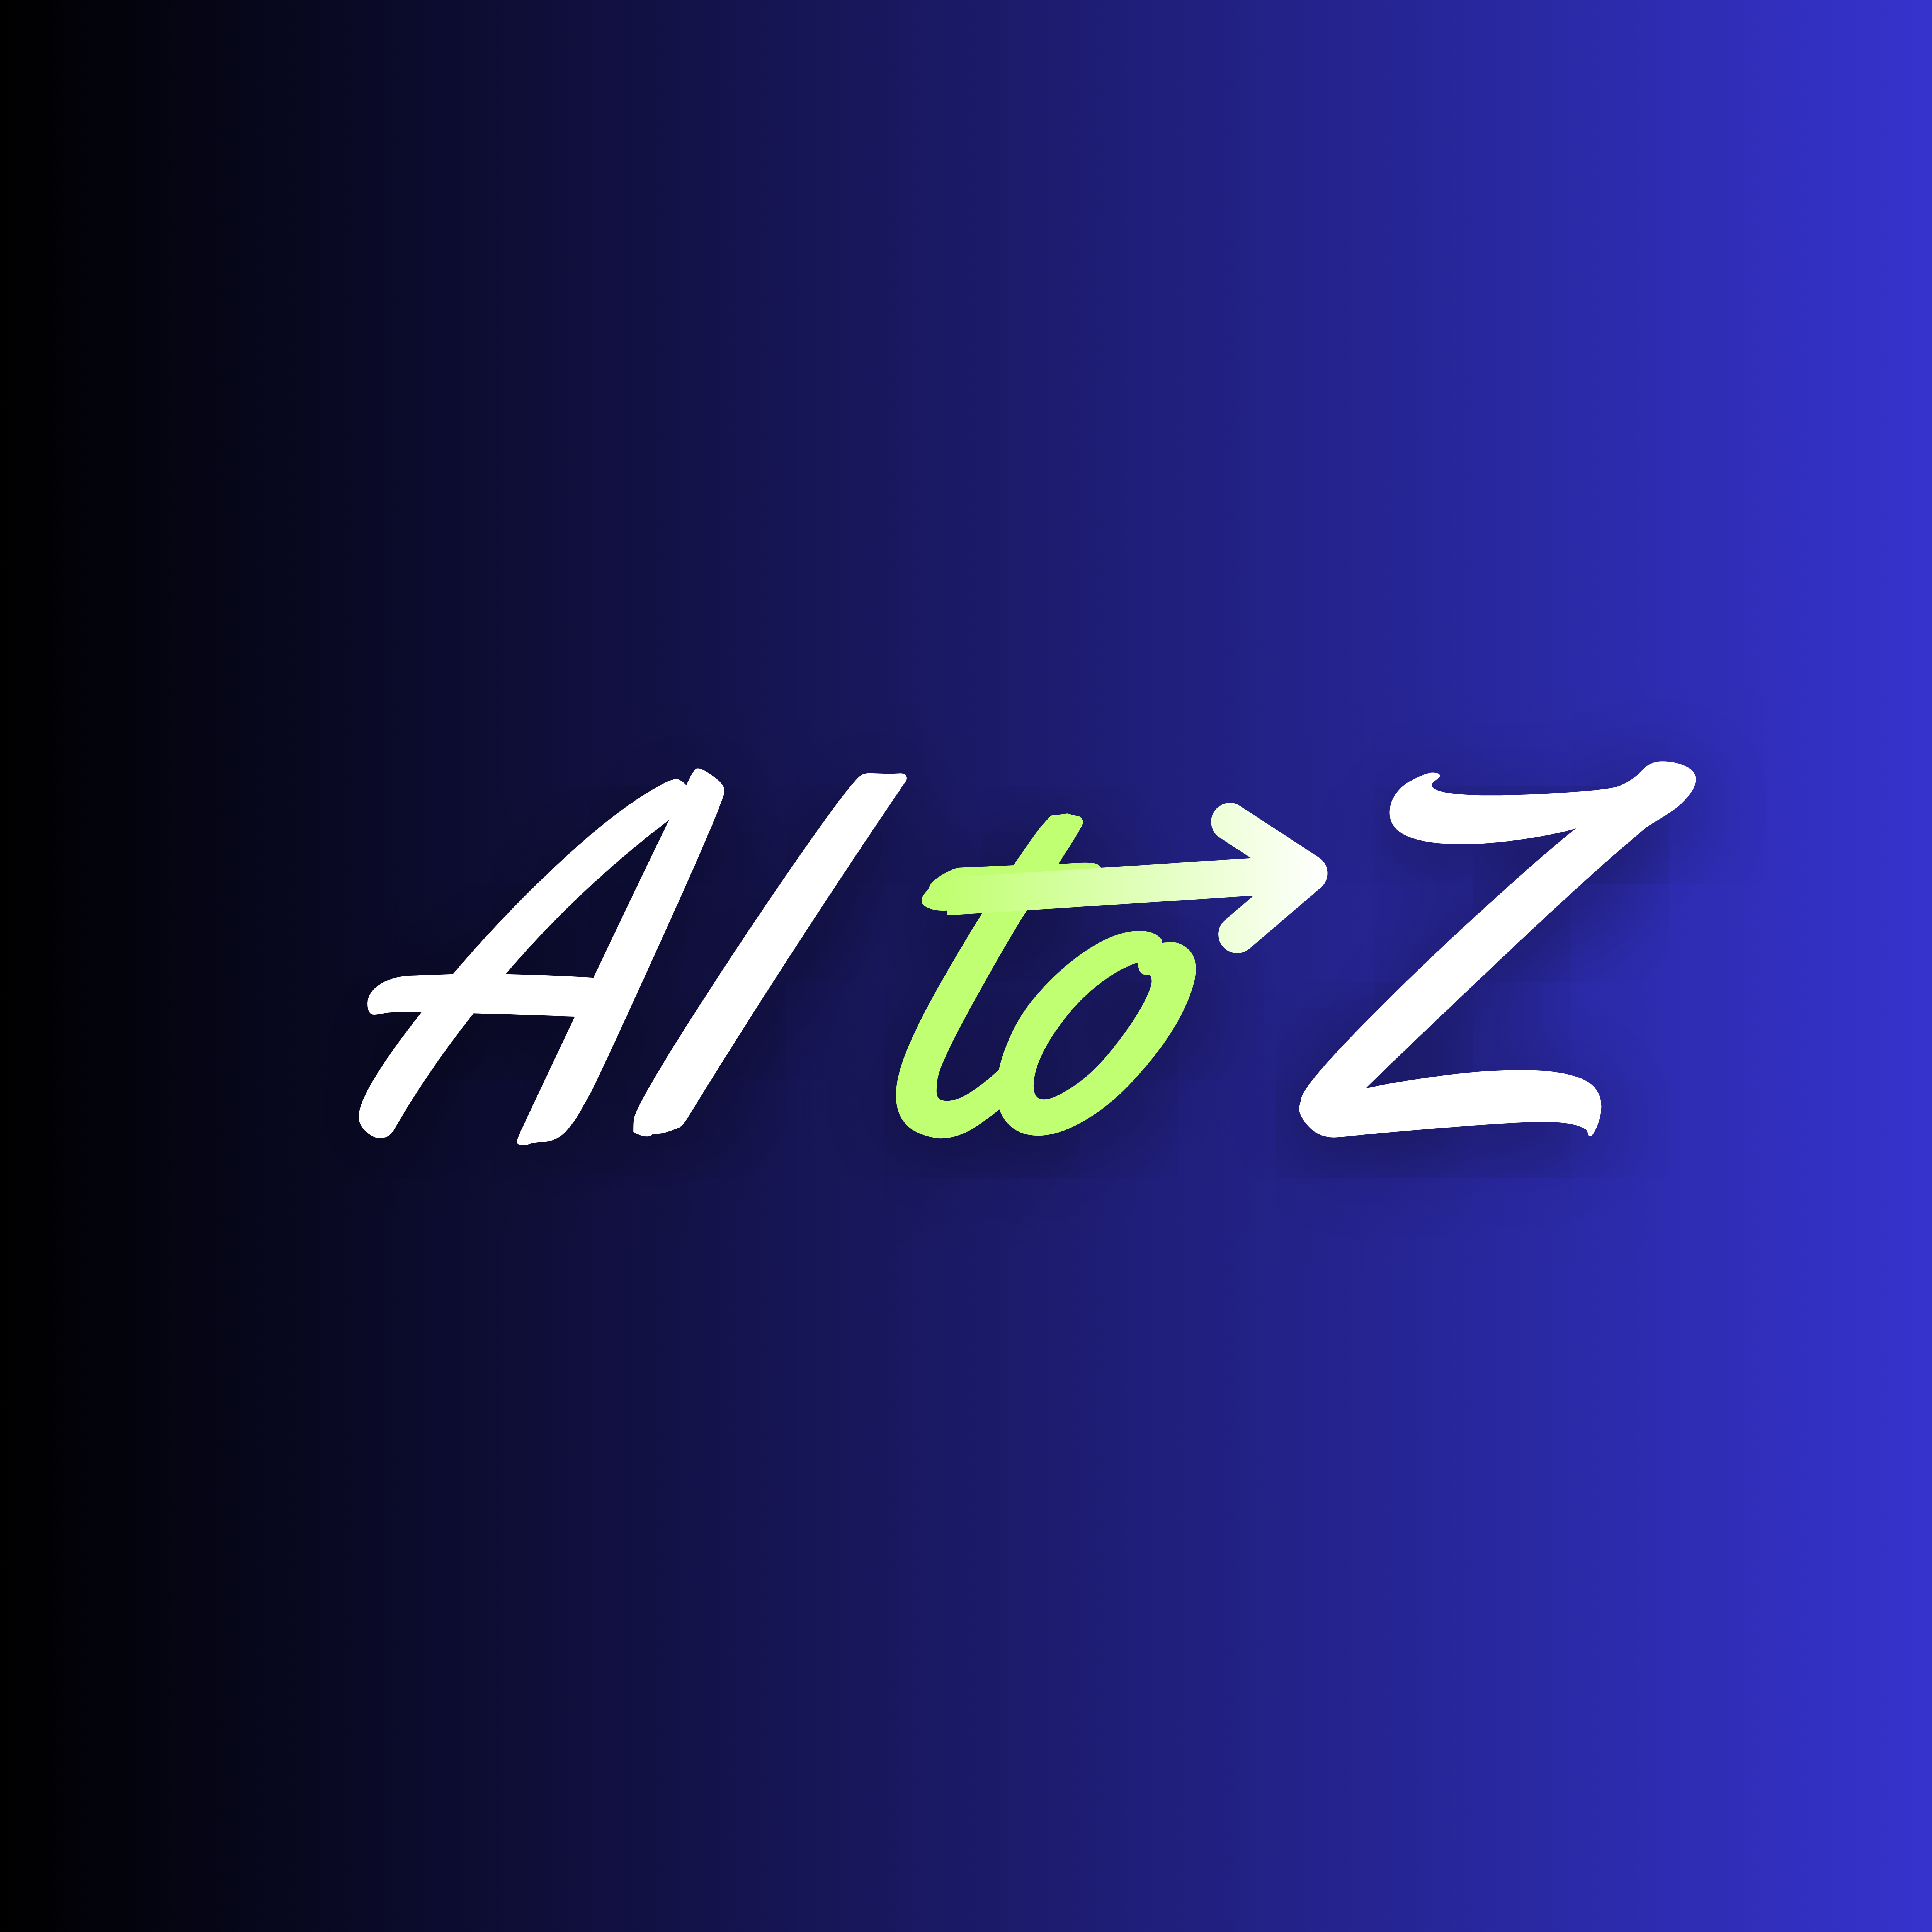 AItoZee - Your Creative AI Playground logo